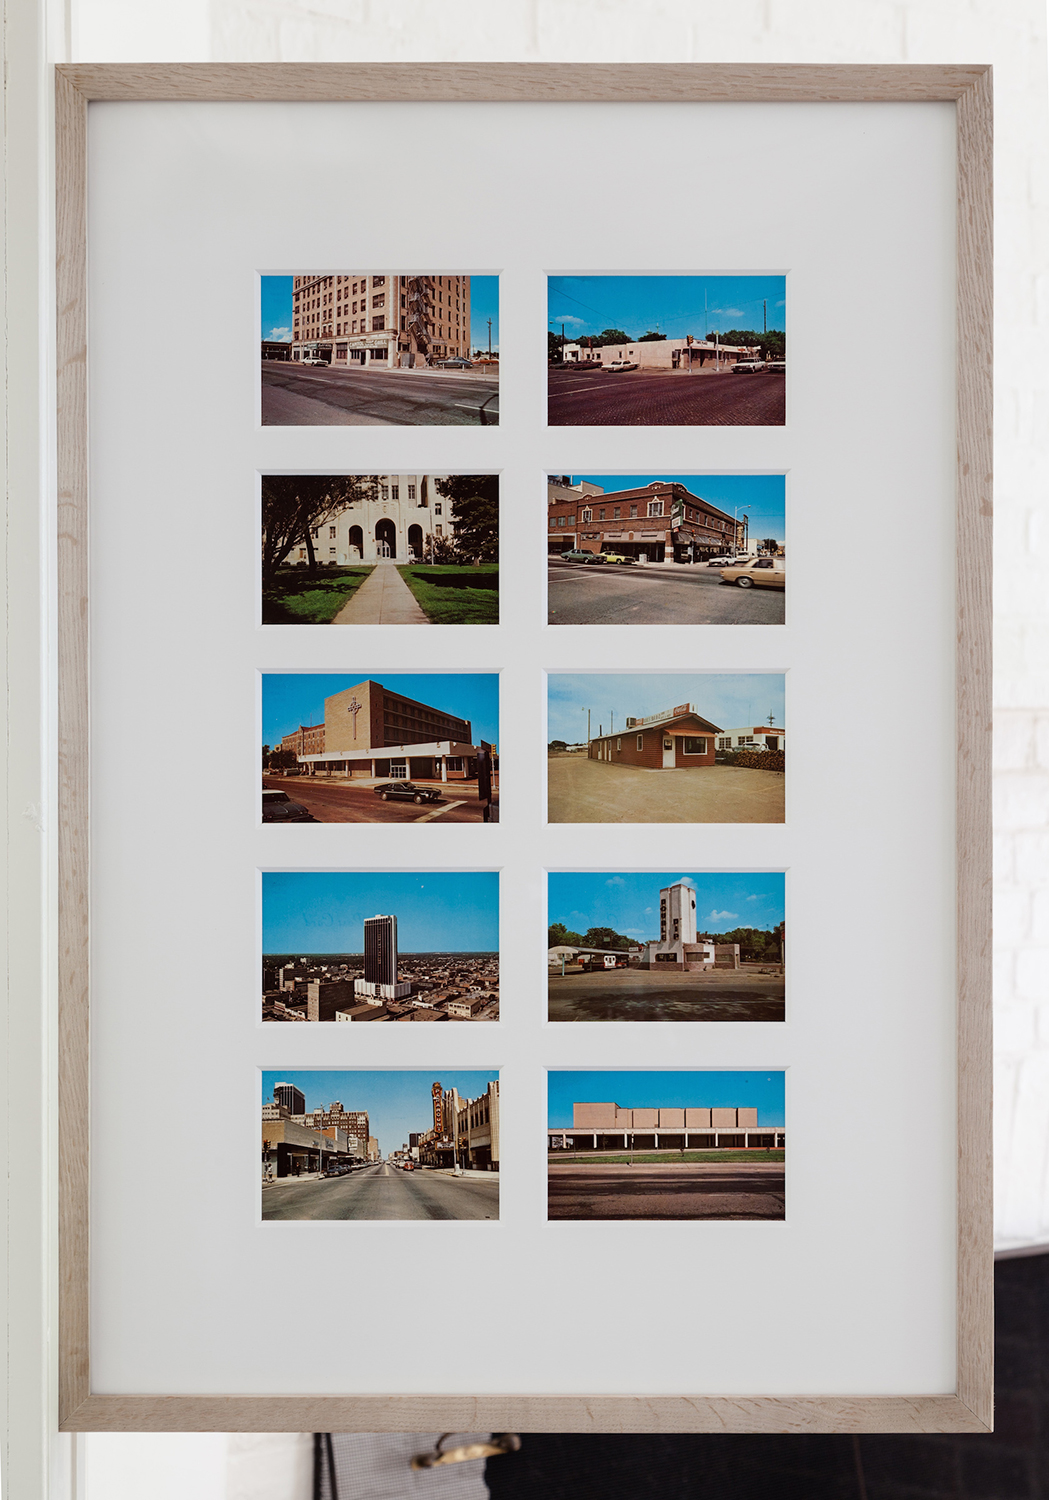  Stephen Shore   Amarillo ‐&nbsp;Tall in Texas   1971  Postcards  3 1/2 x 5 1/2 inches each    